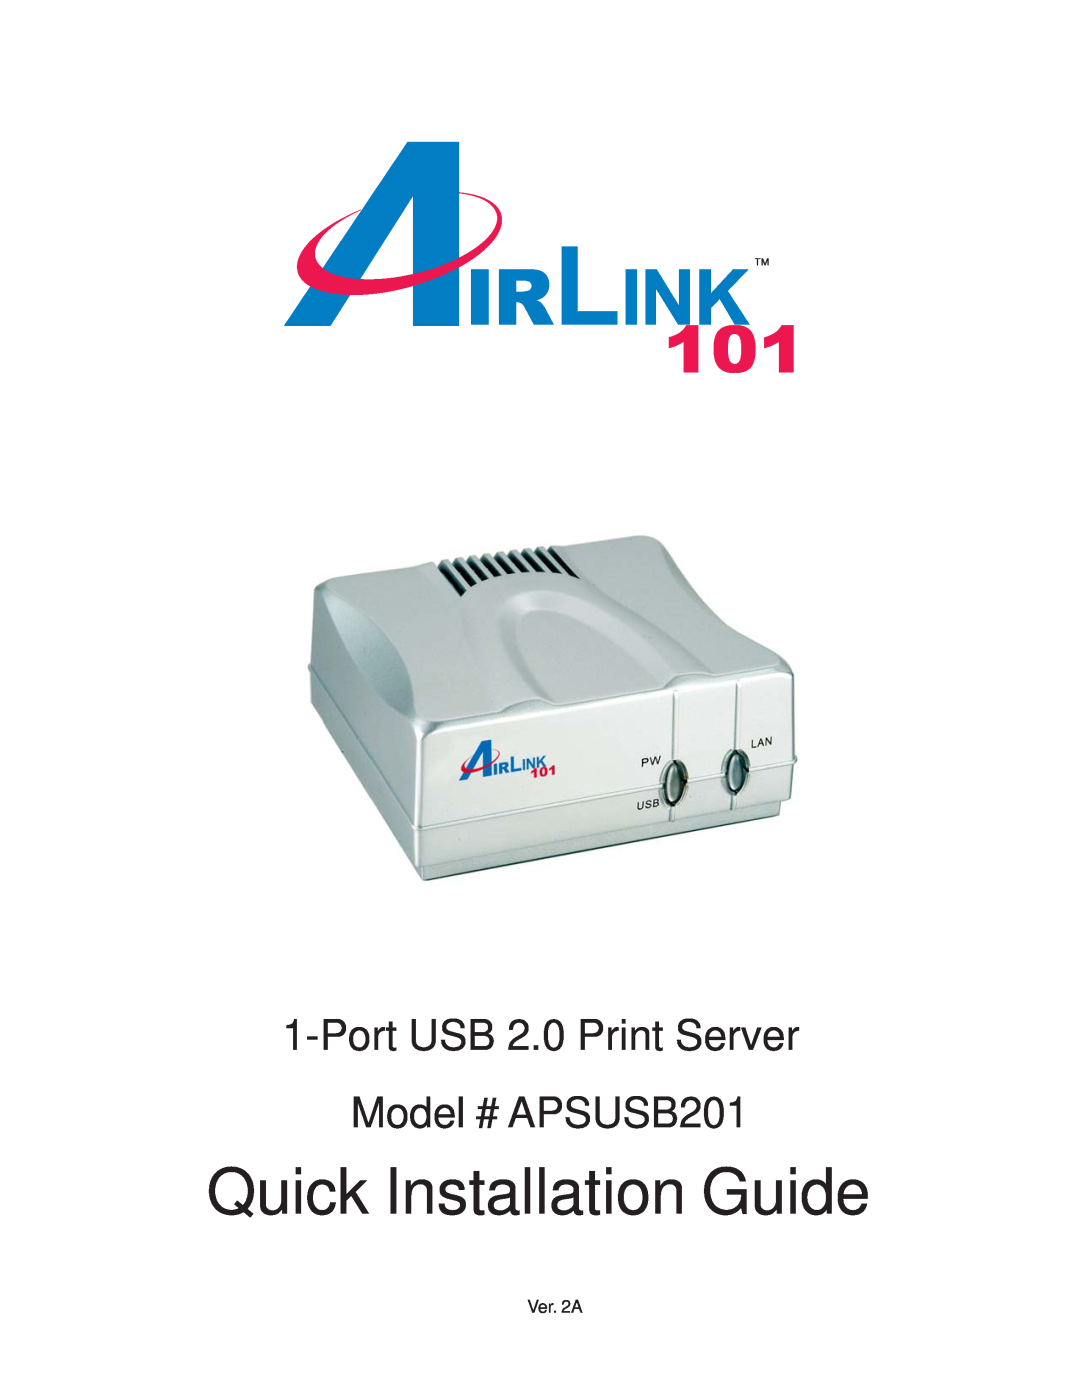 Airlink101 manual Quick Installation Guide, Port USB 2.0 Print Server Model # APSUSB201, Ver. 2A 